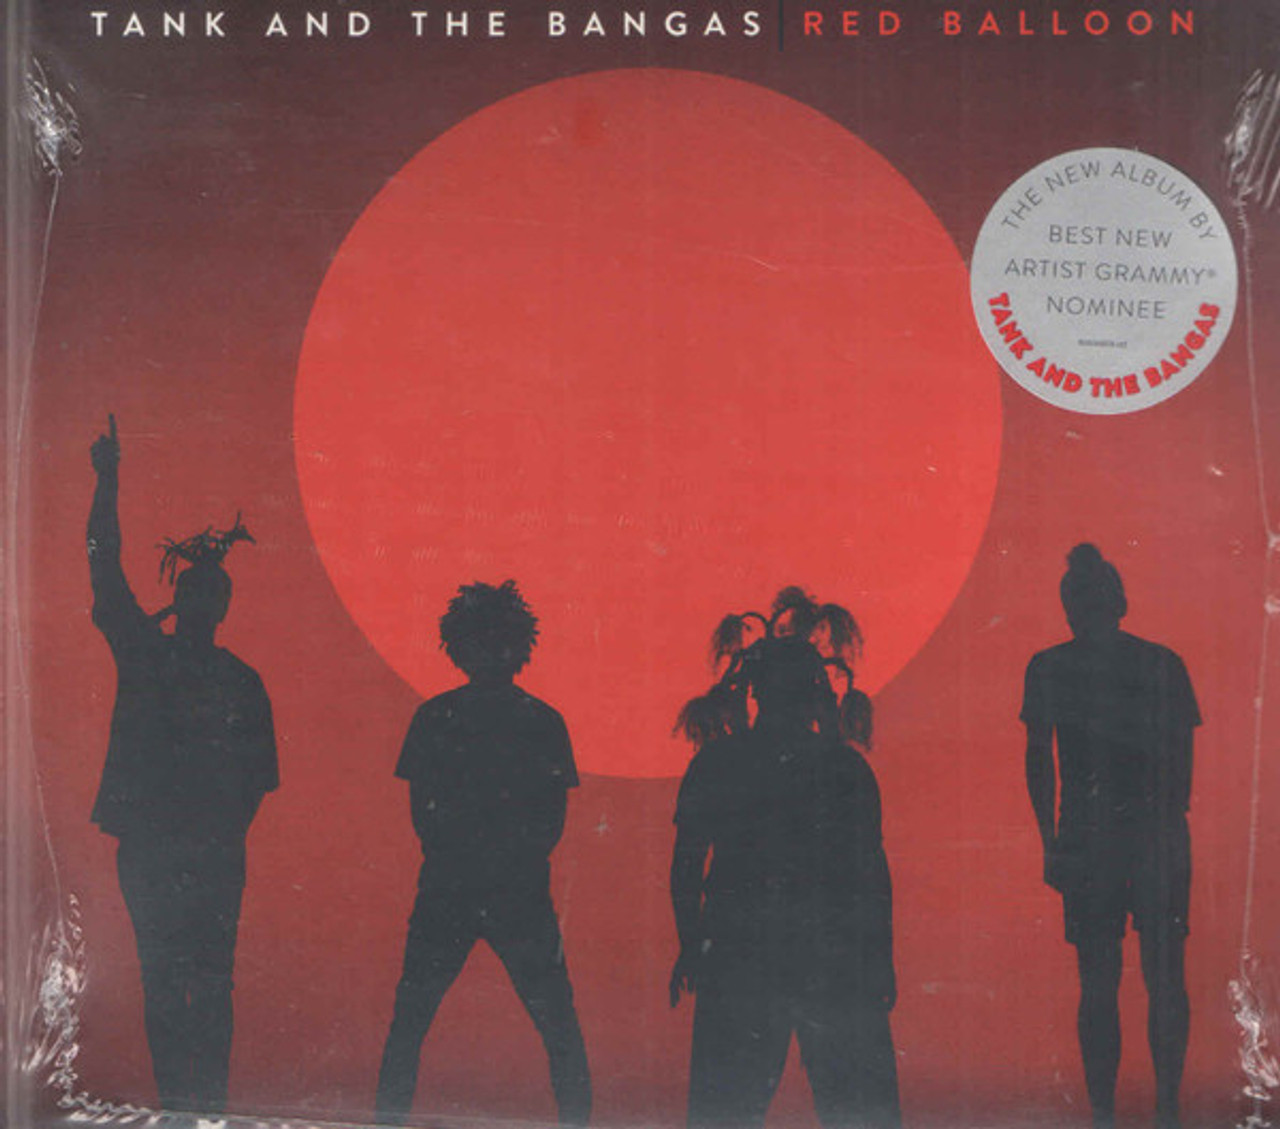 Omega　BALLOON　THE　(#602445099139)　BANGAS　Music　RED　TANK